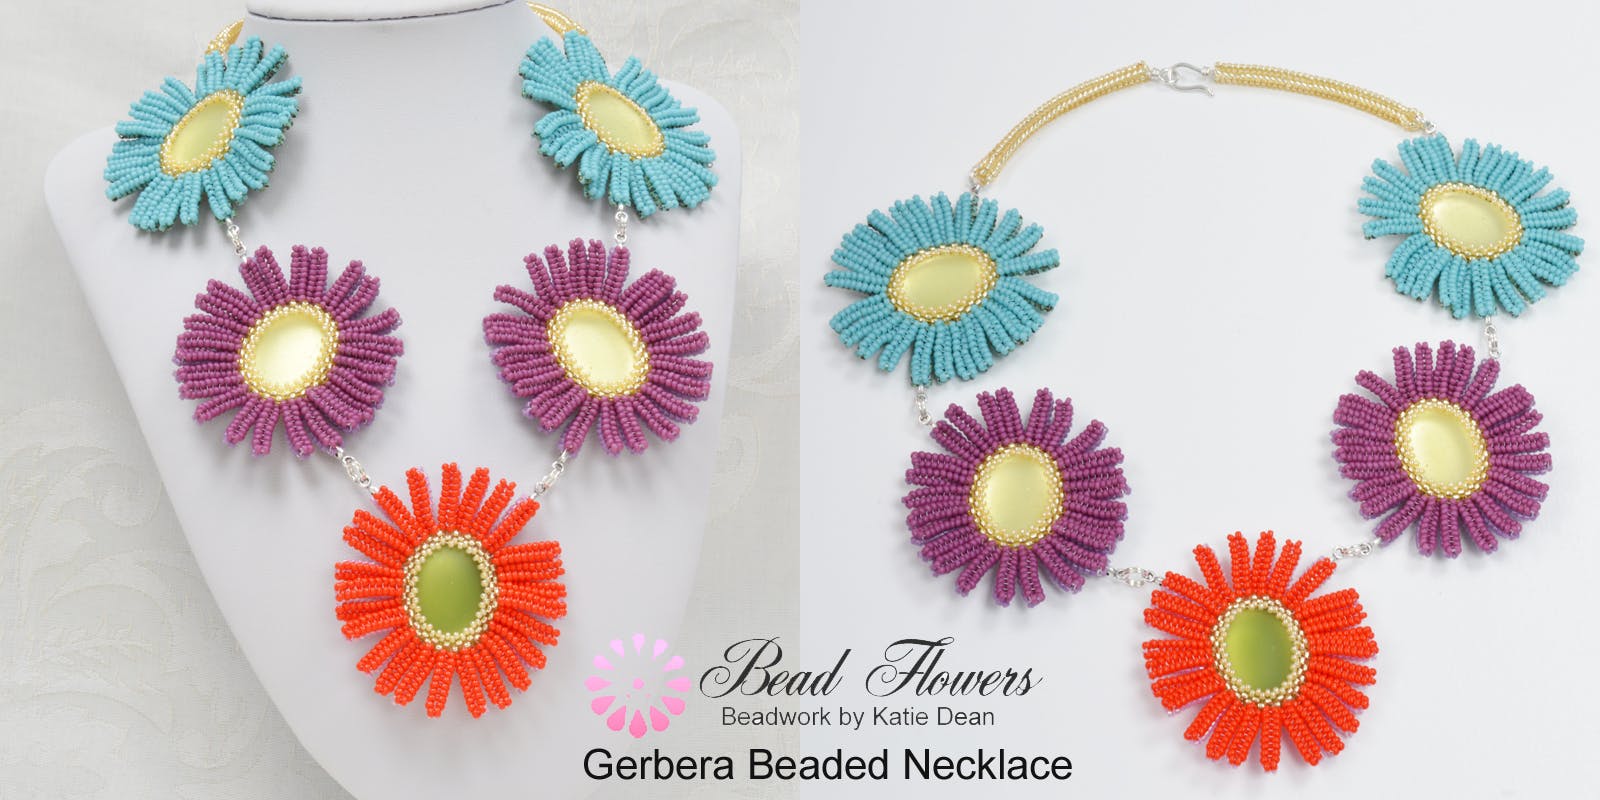 Gerbera Beaded Necklace Class